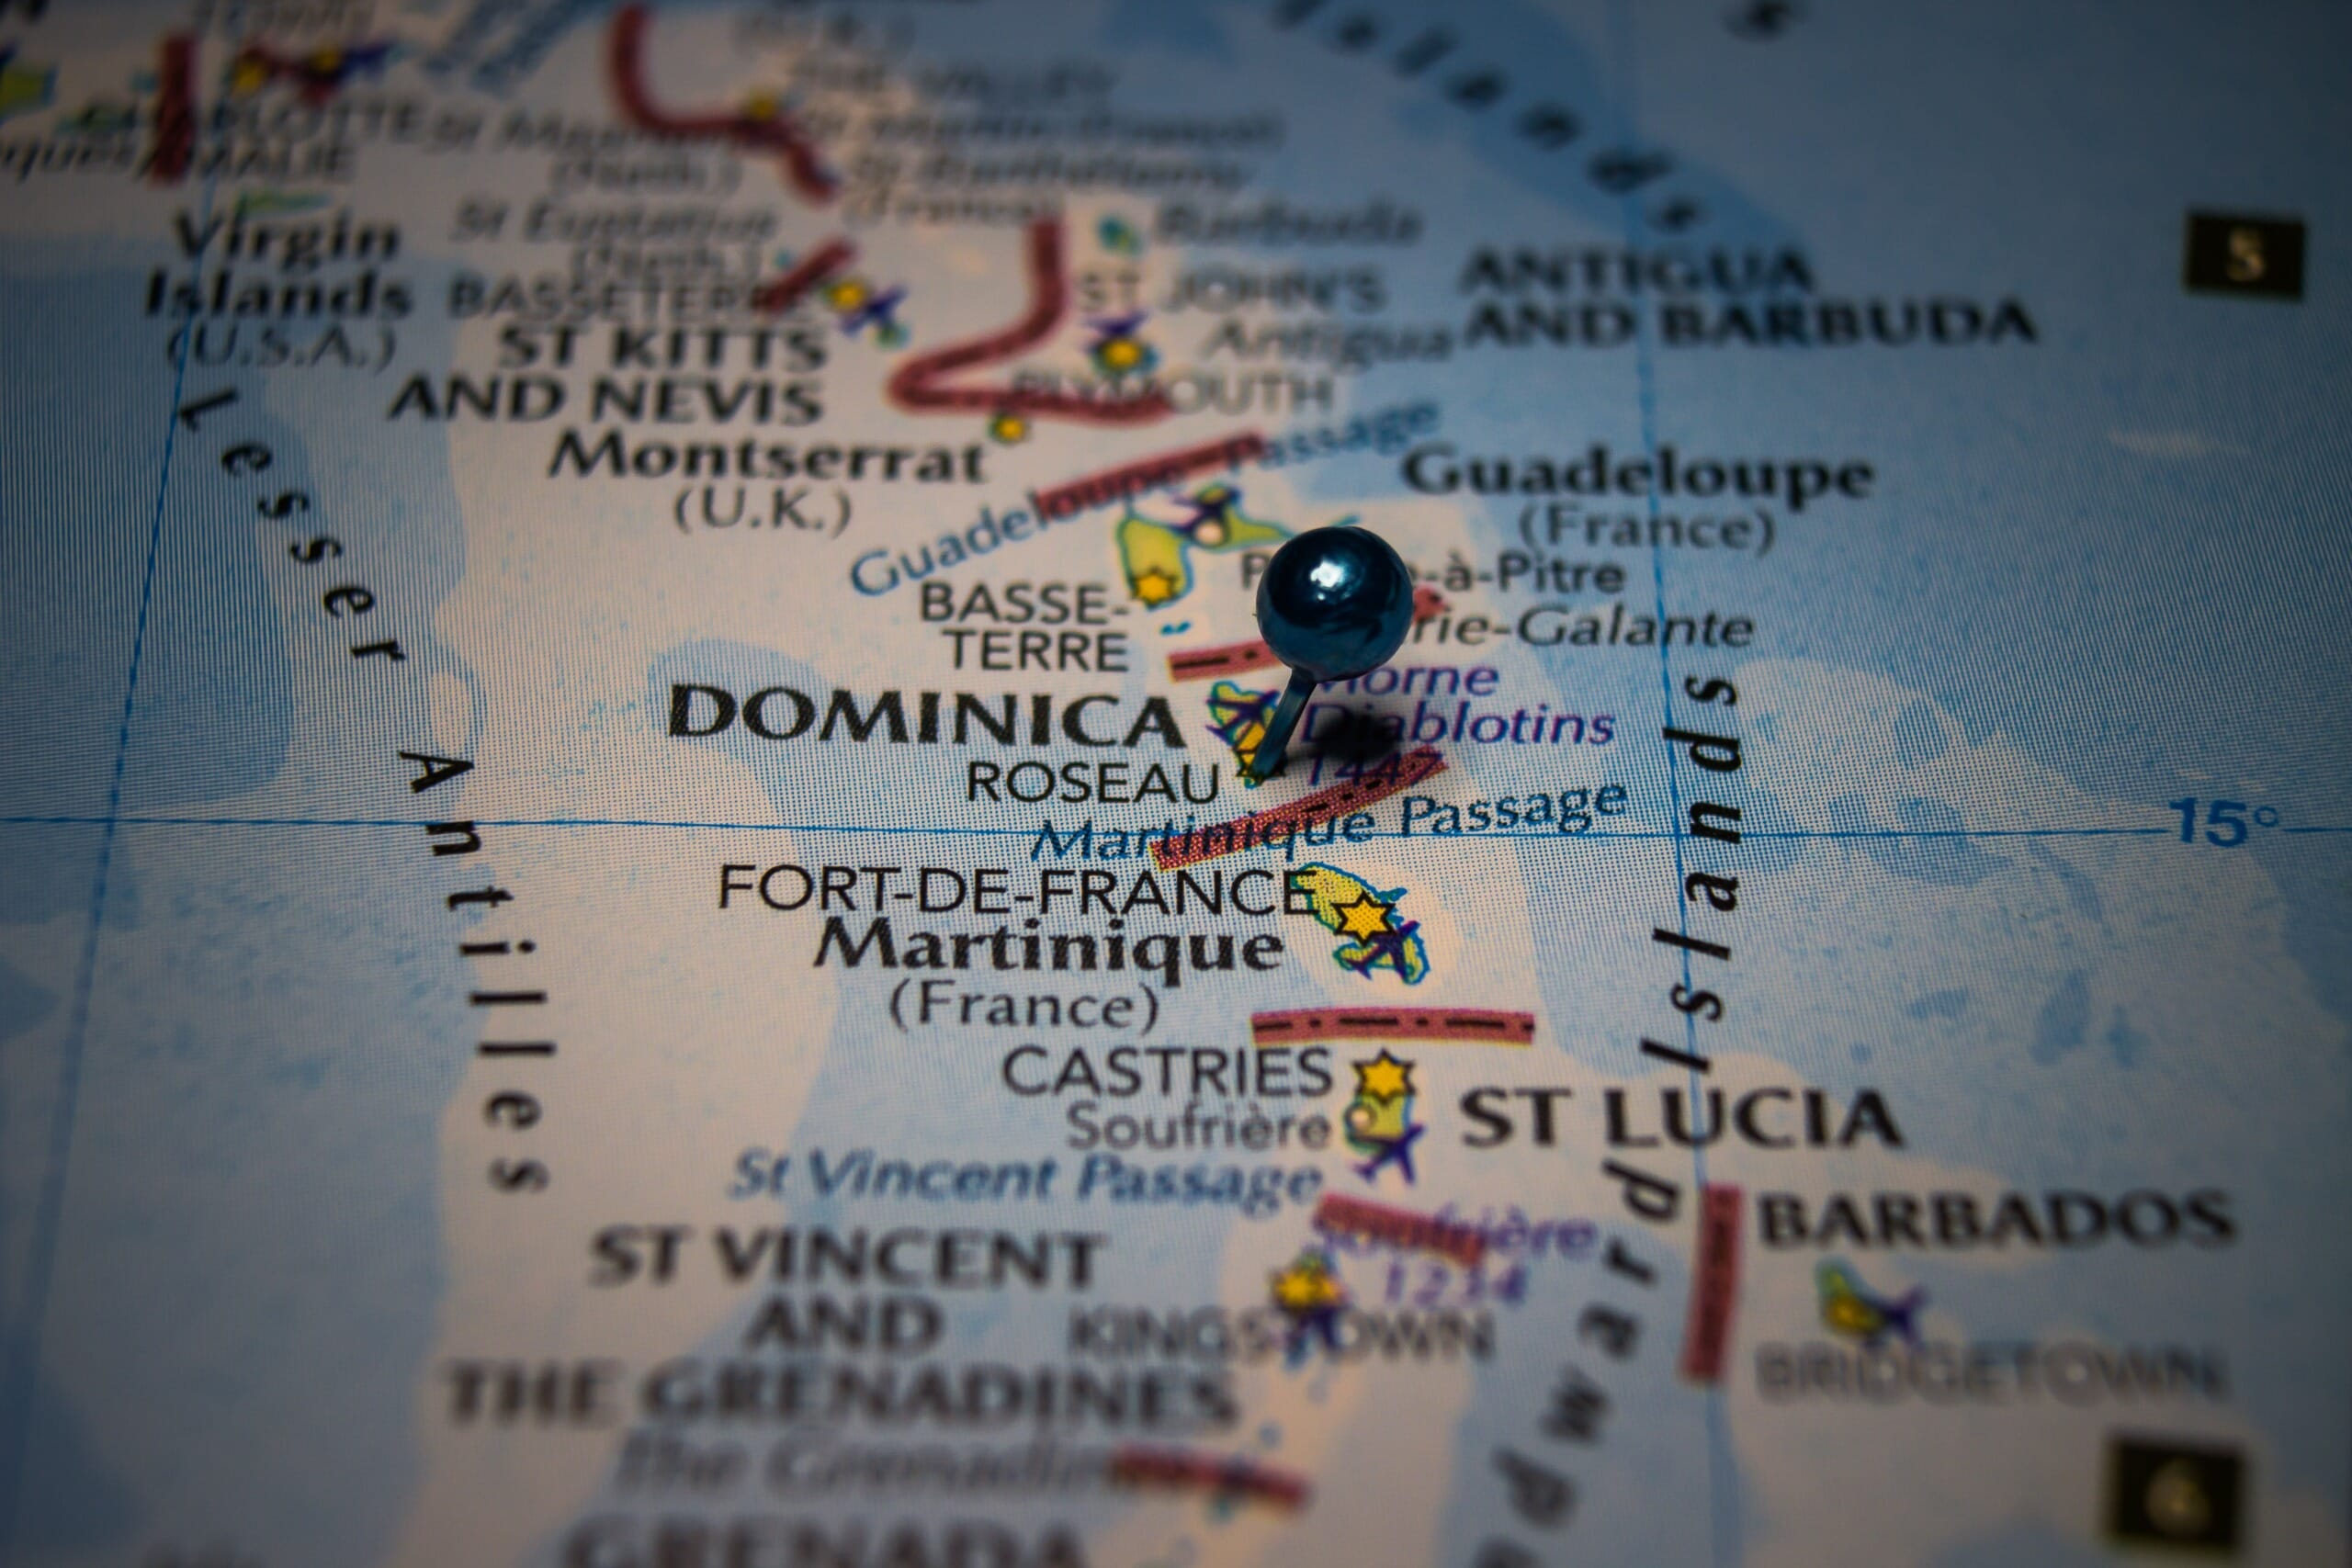 Guadeloupe Maps & Facts - World Atlas